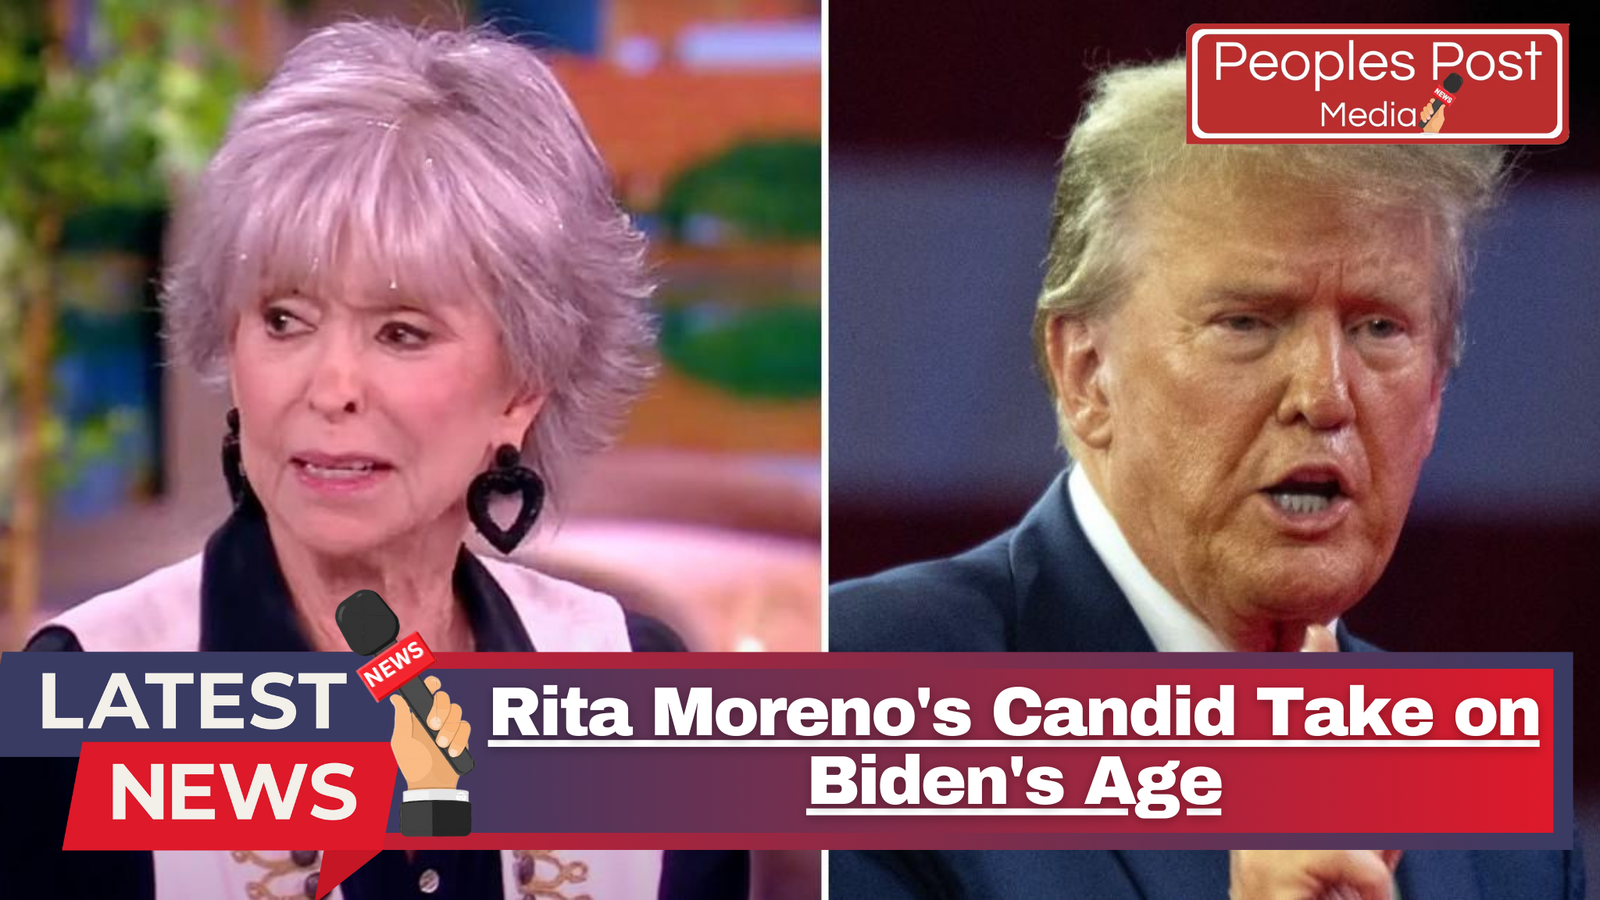 Rita Moreno's Candid Take on Biden's Age